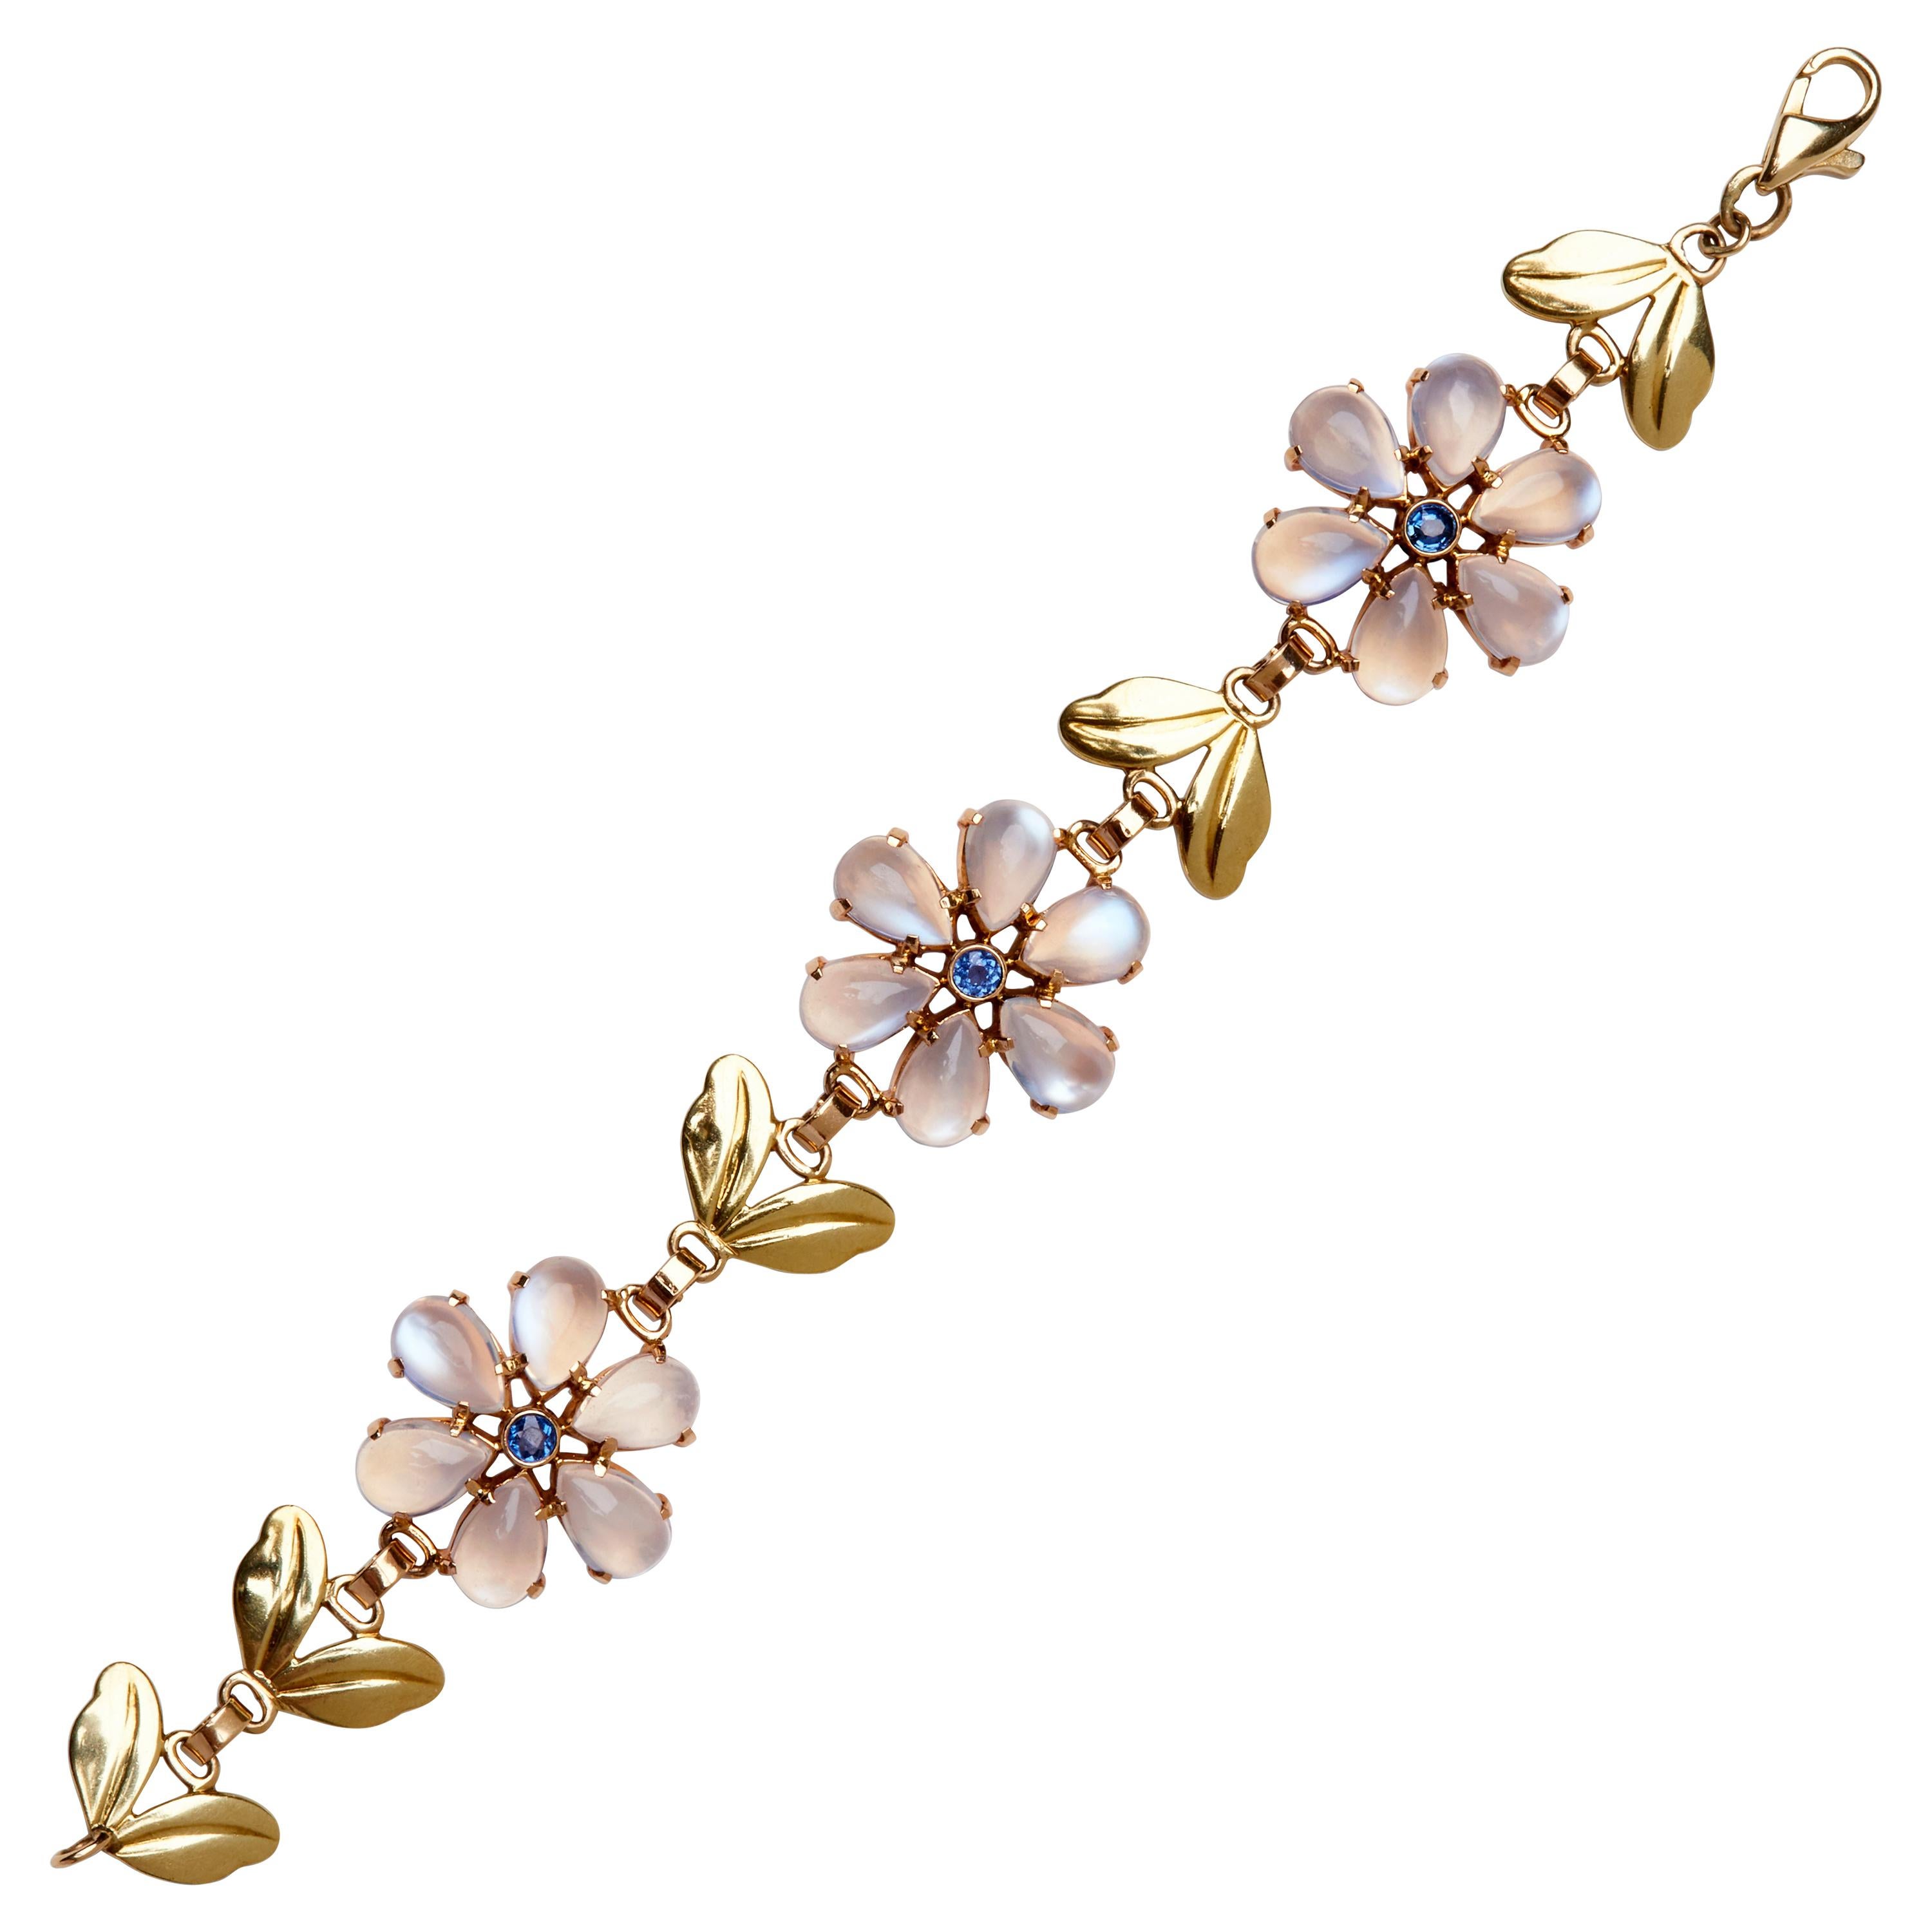 Tiffany & Co. 14k Yellow Gold and Moonstone Bracelet